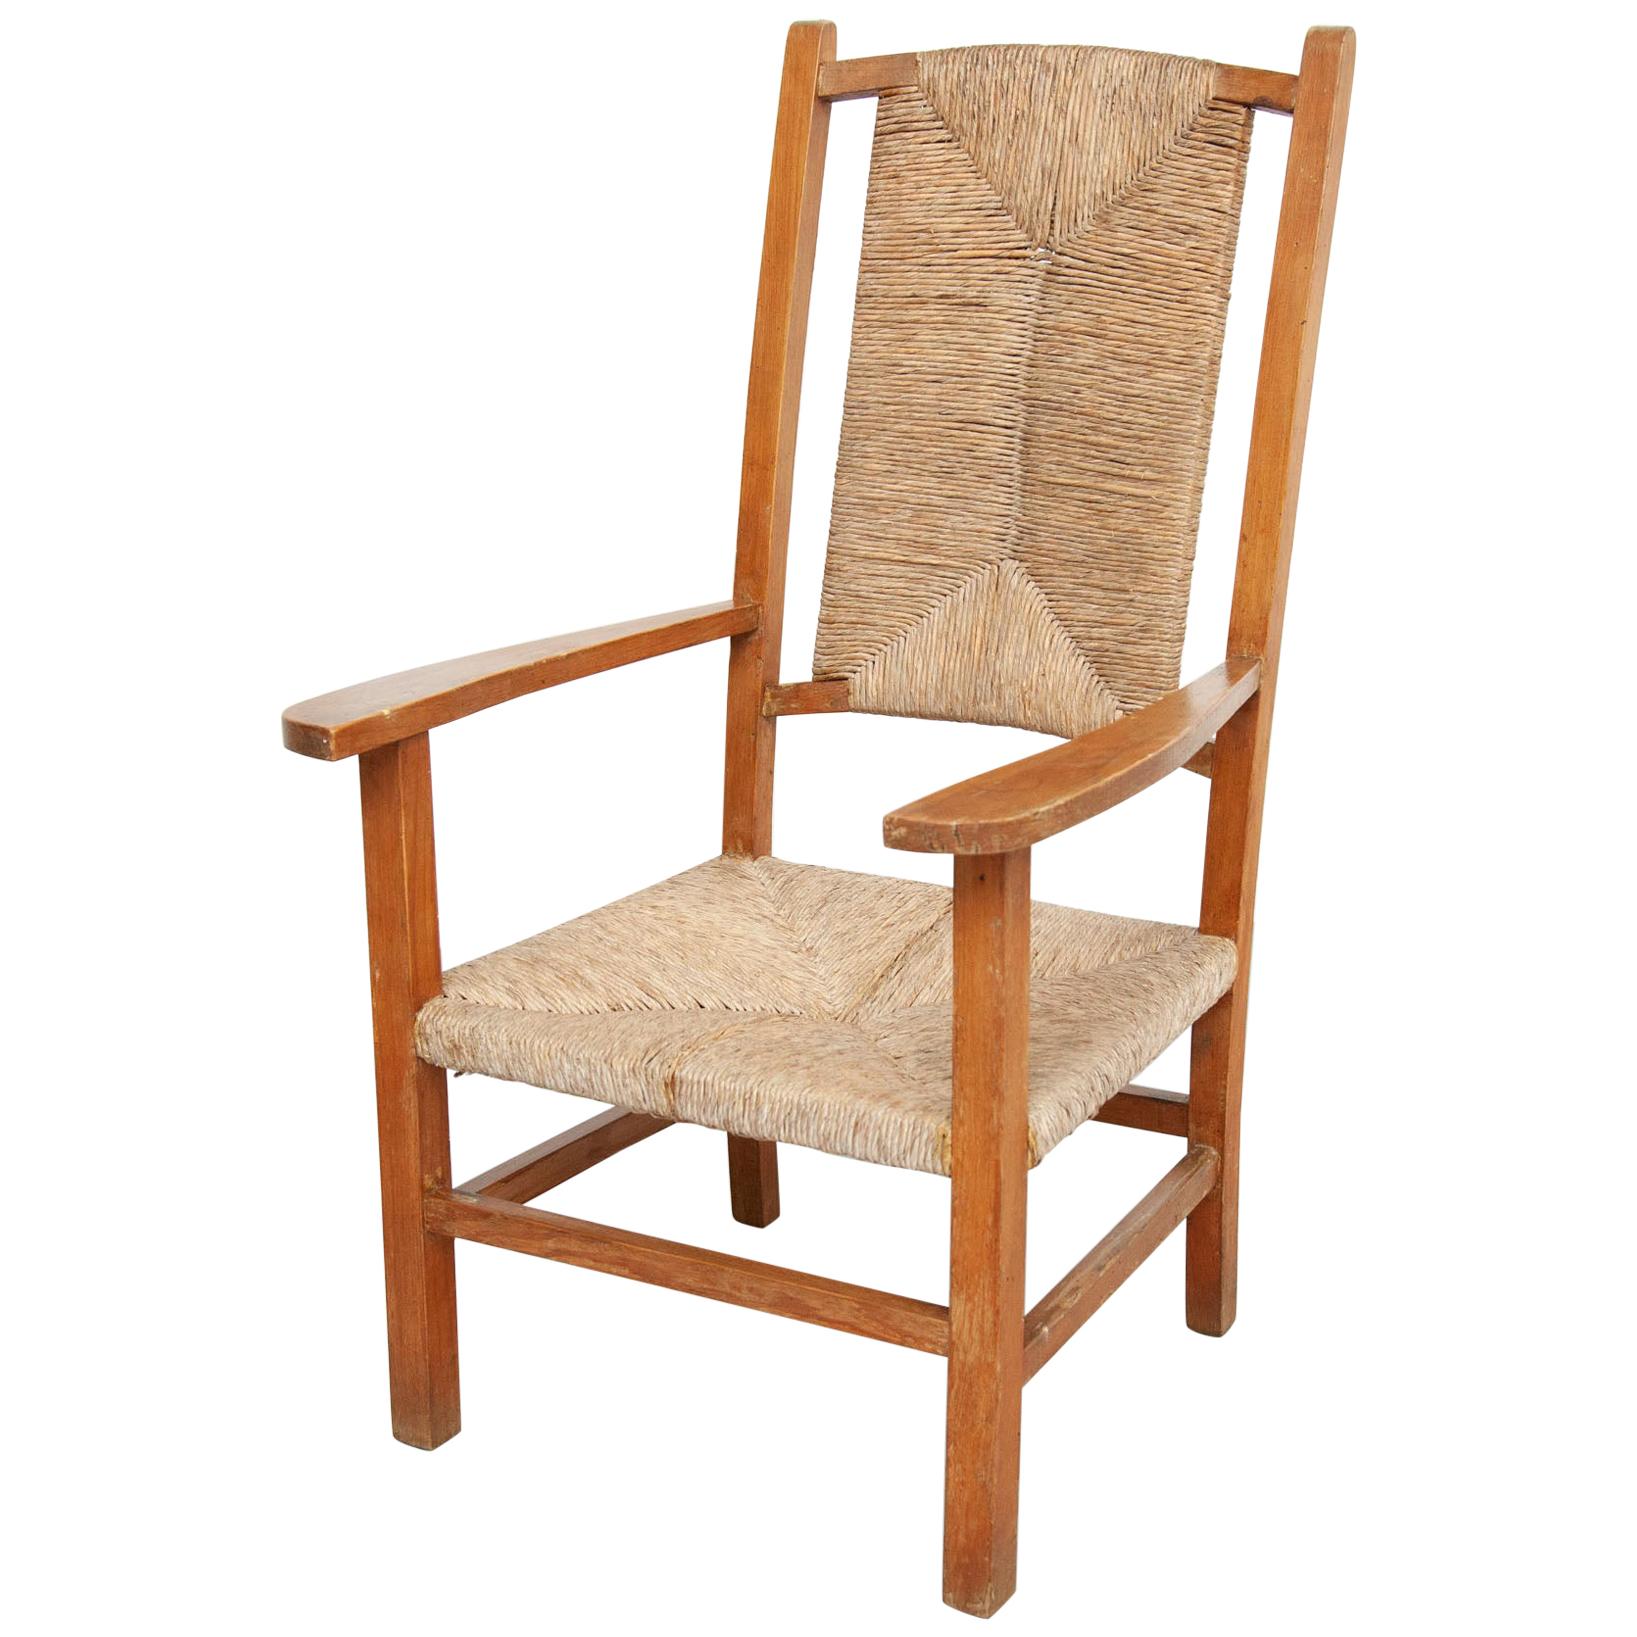 Mid-Century Modern Wood and Rattan Chair, circa 1940